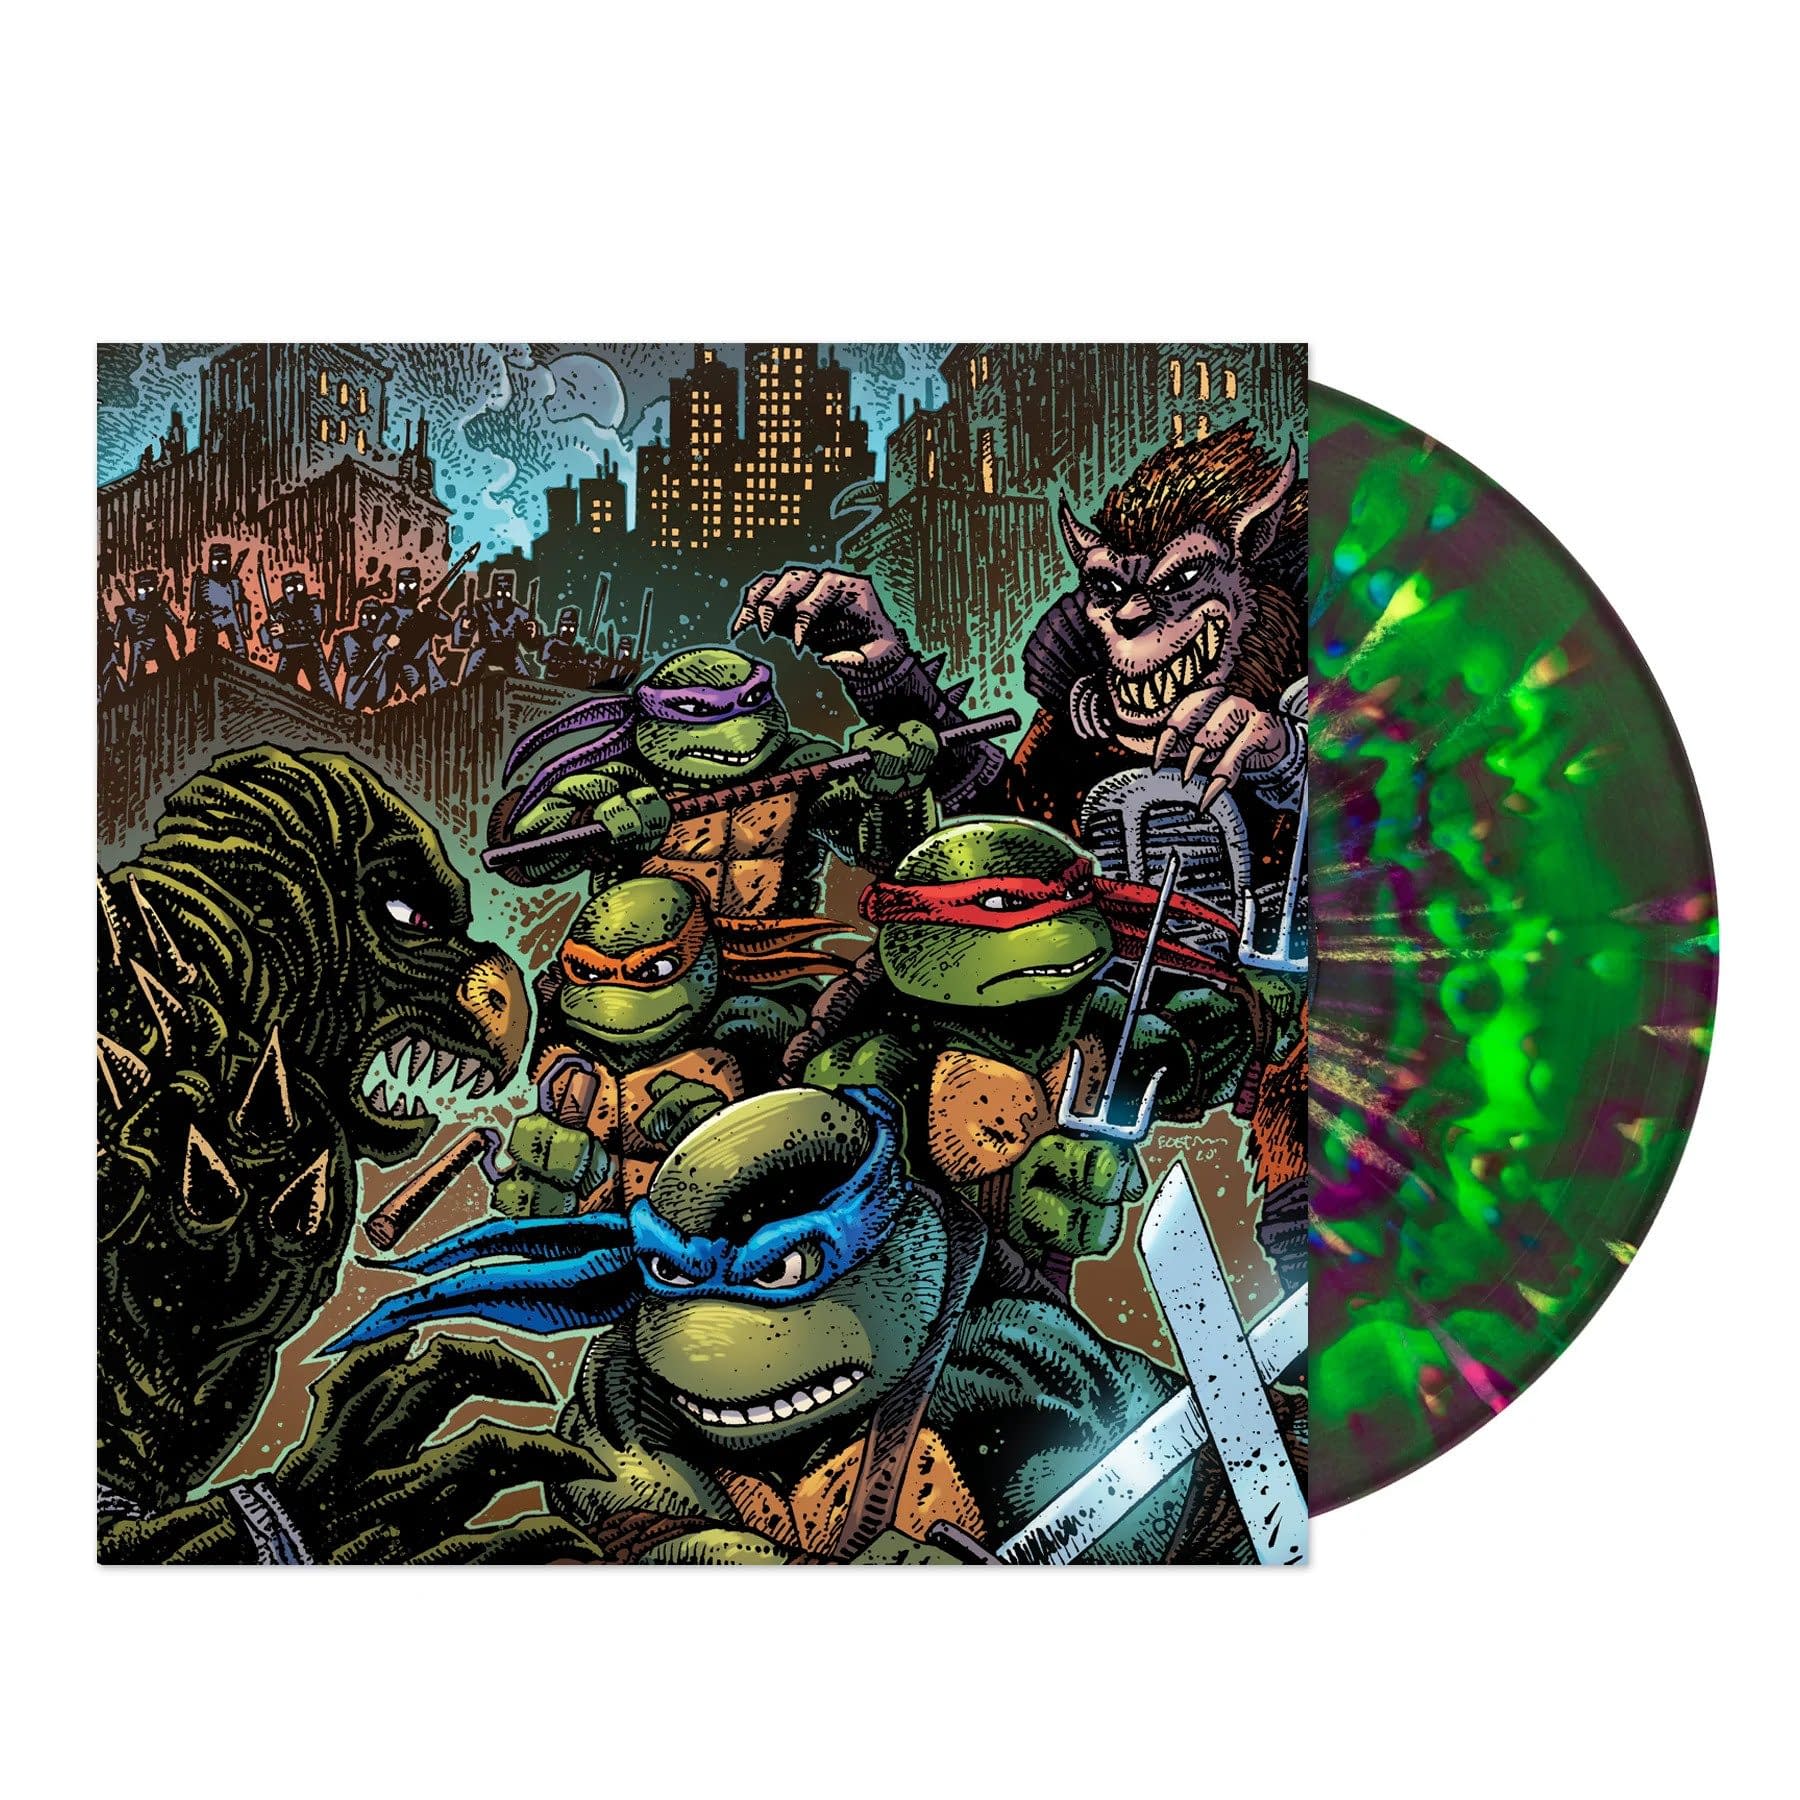 Tmnt ost. Teenage Mutant Ninja Turtles: Shredder’s Revenge обложка. Новый проект по Черепашкам ниндзя. Teenage Mutant Ninja Turtles: the Cowabunga collection обложка. Черепашки ниндзя 2 фигурки.